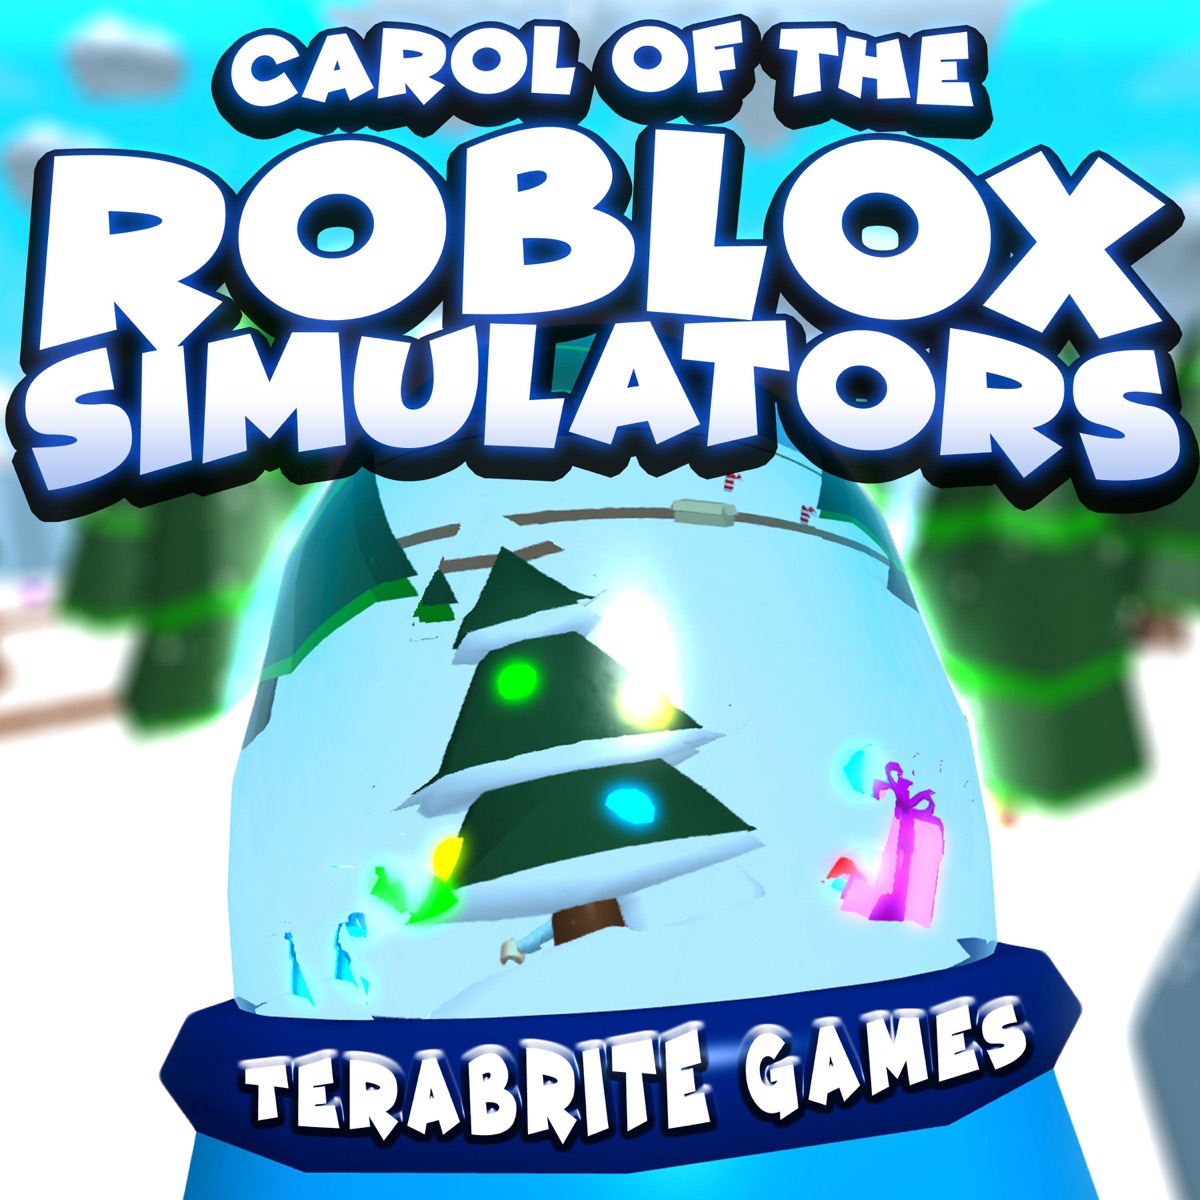 Carol Of The Roblox Simulators Terabrite Games Lyrics Ratings And Reviews - old jazz roblox